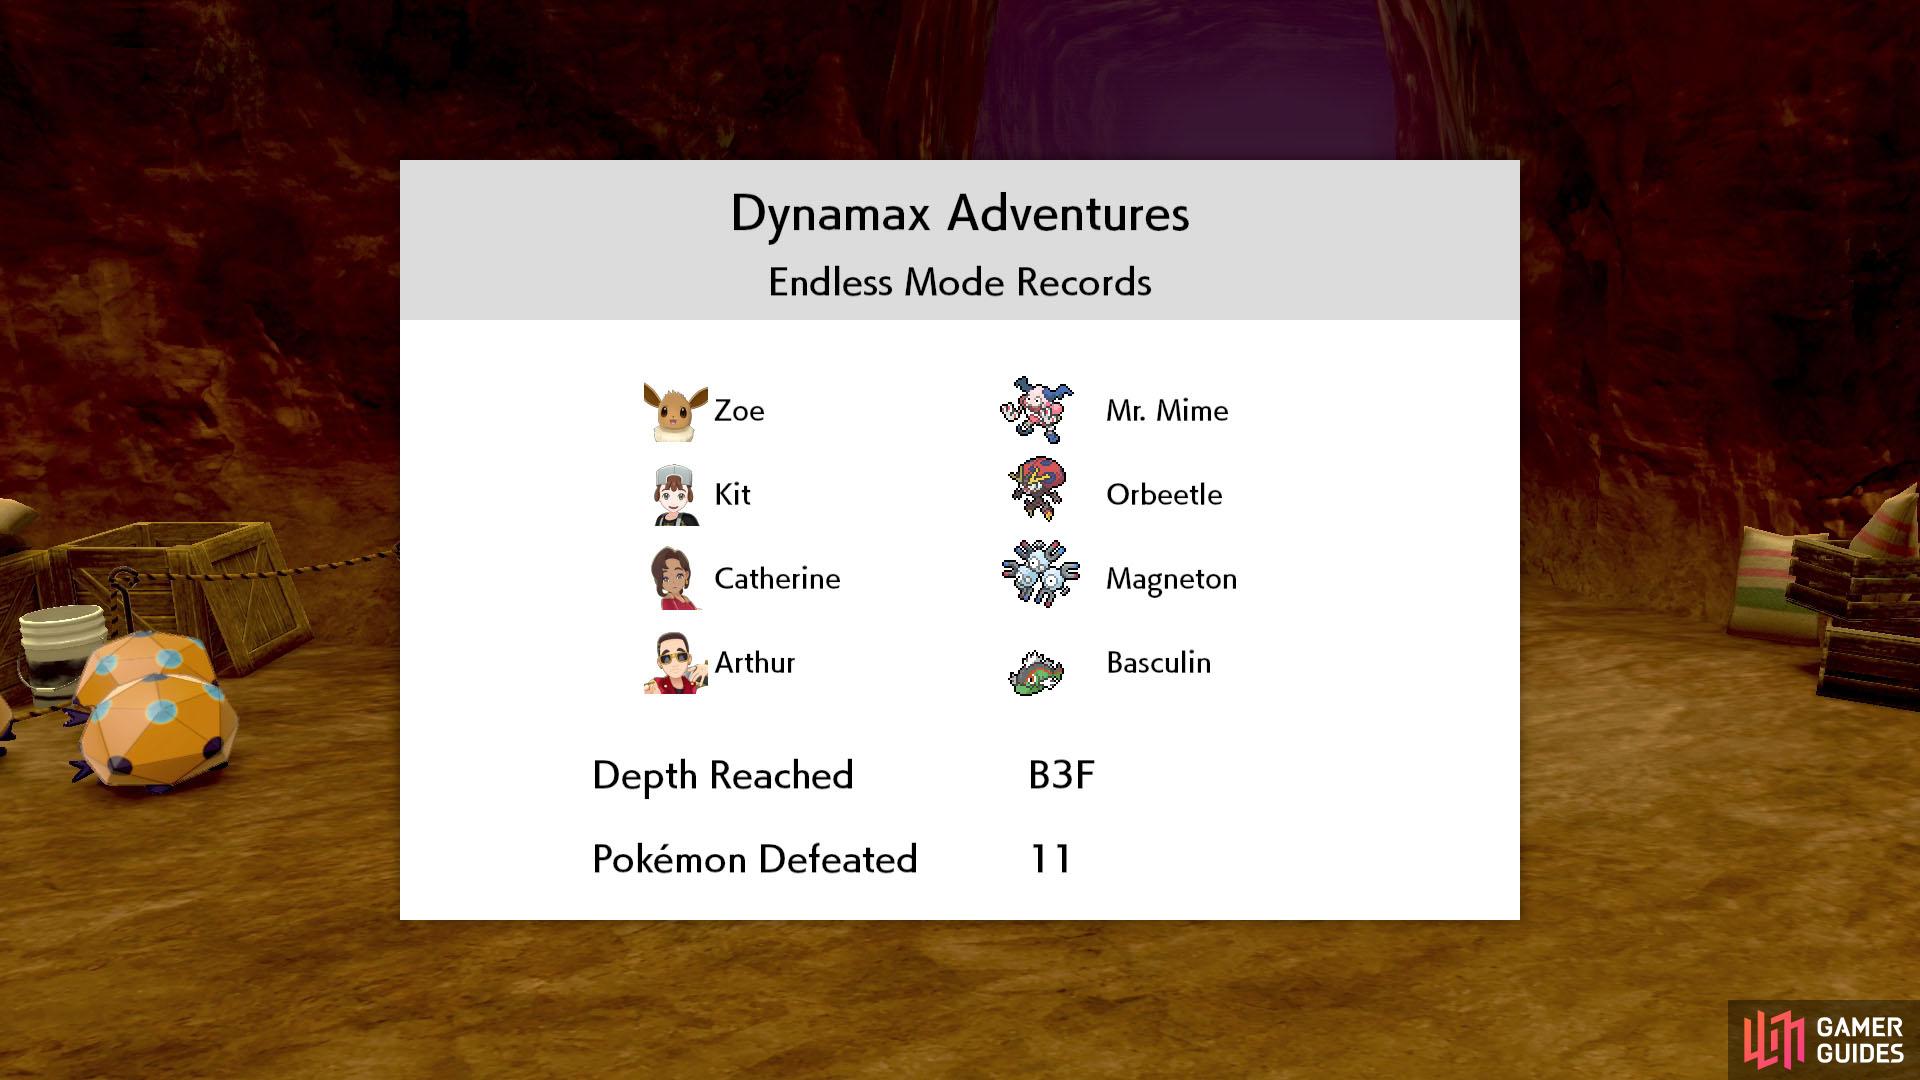 Dinamax adventure version exclusives : r/PokemonSwordAndShield